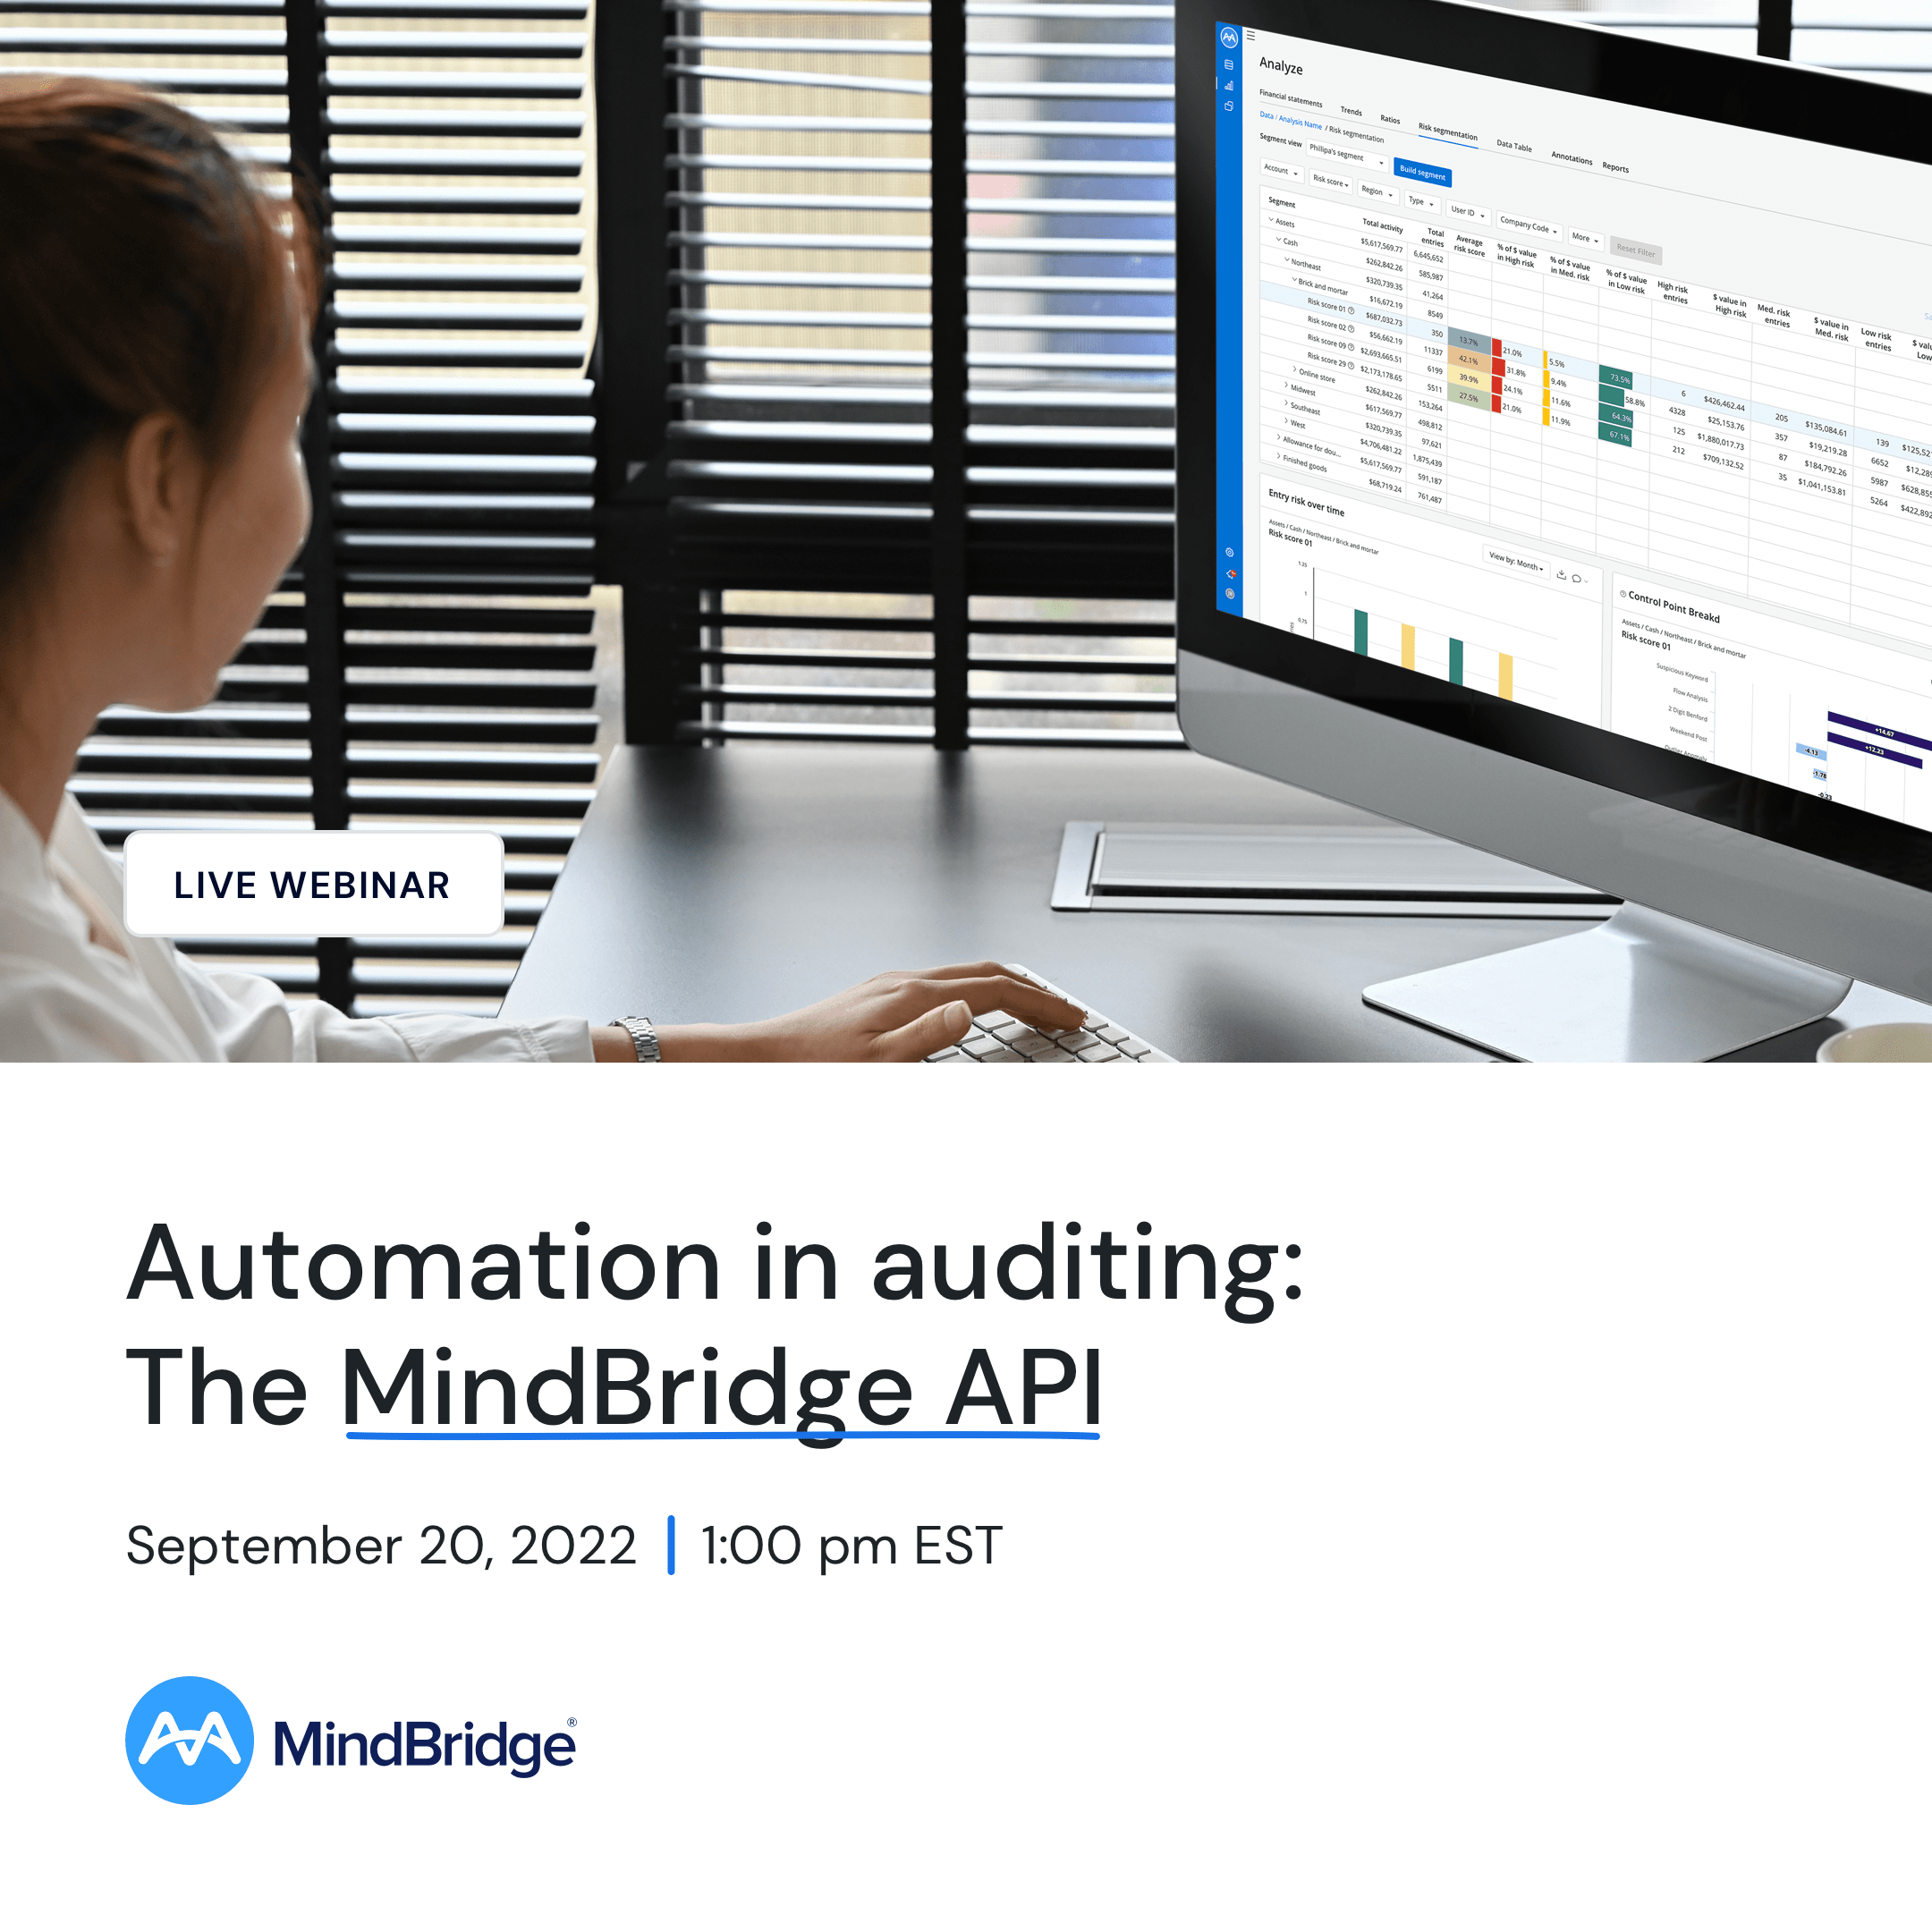  Automation in Auditing at scale using the MindBridge API